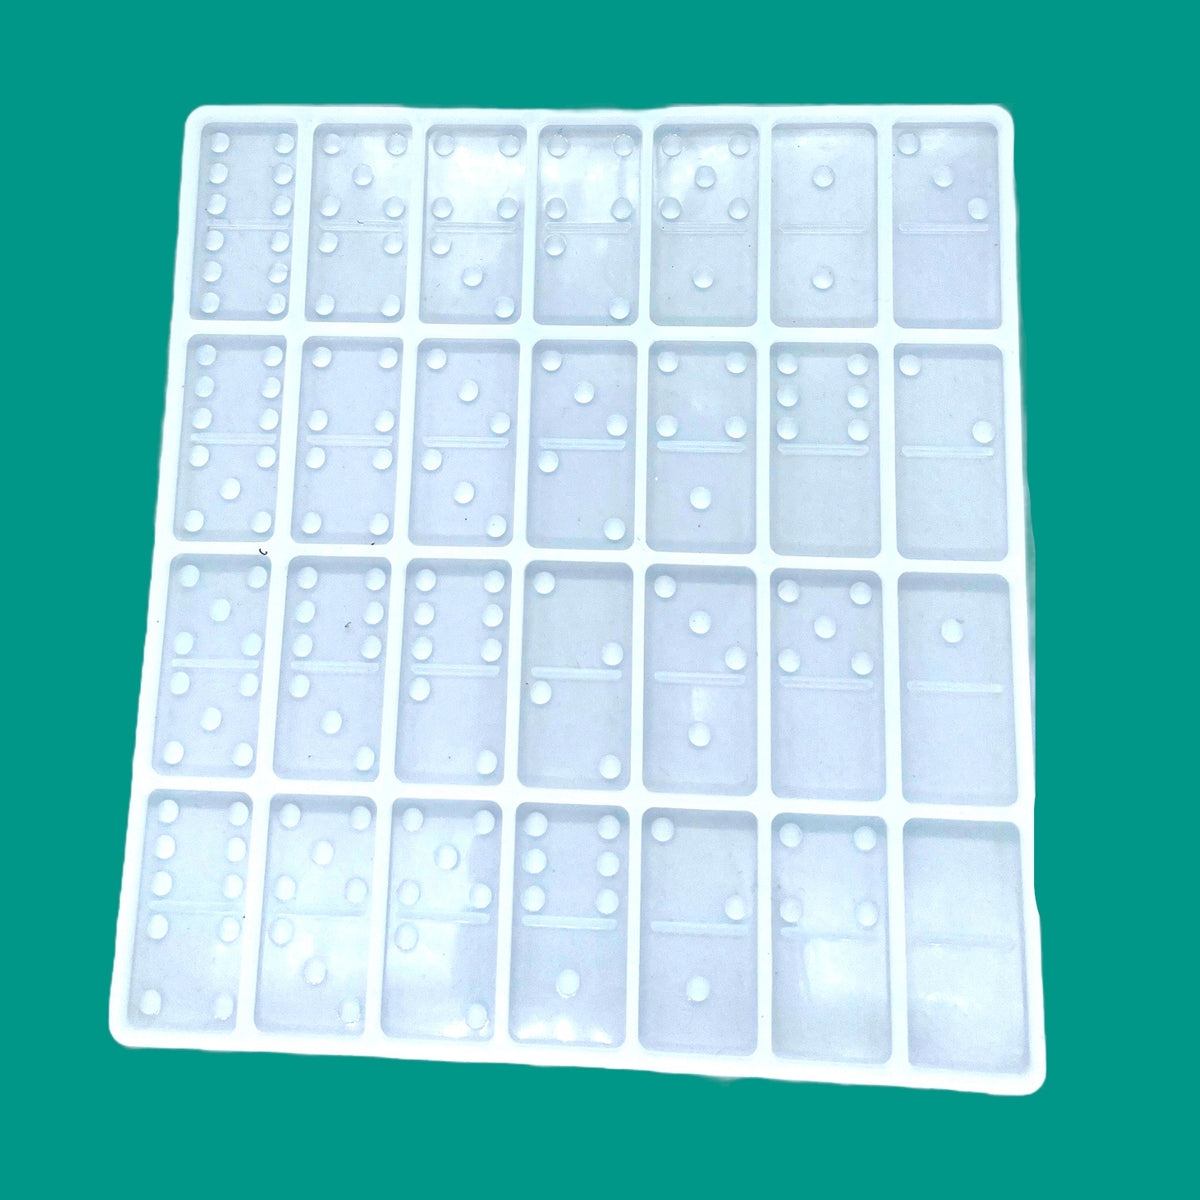 Standard Original Domino Transparent Silicone Mold for UV or Epoxy Resin Art